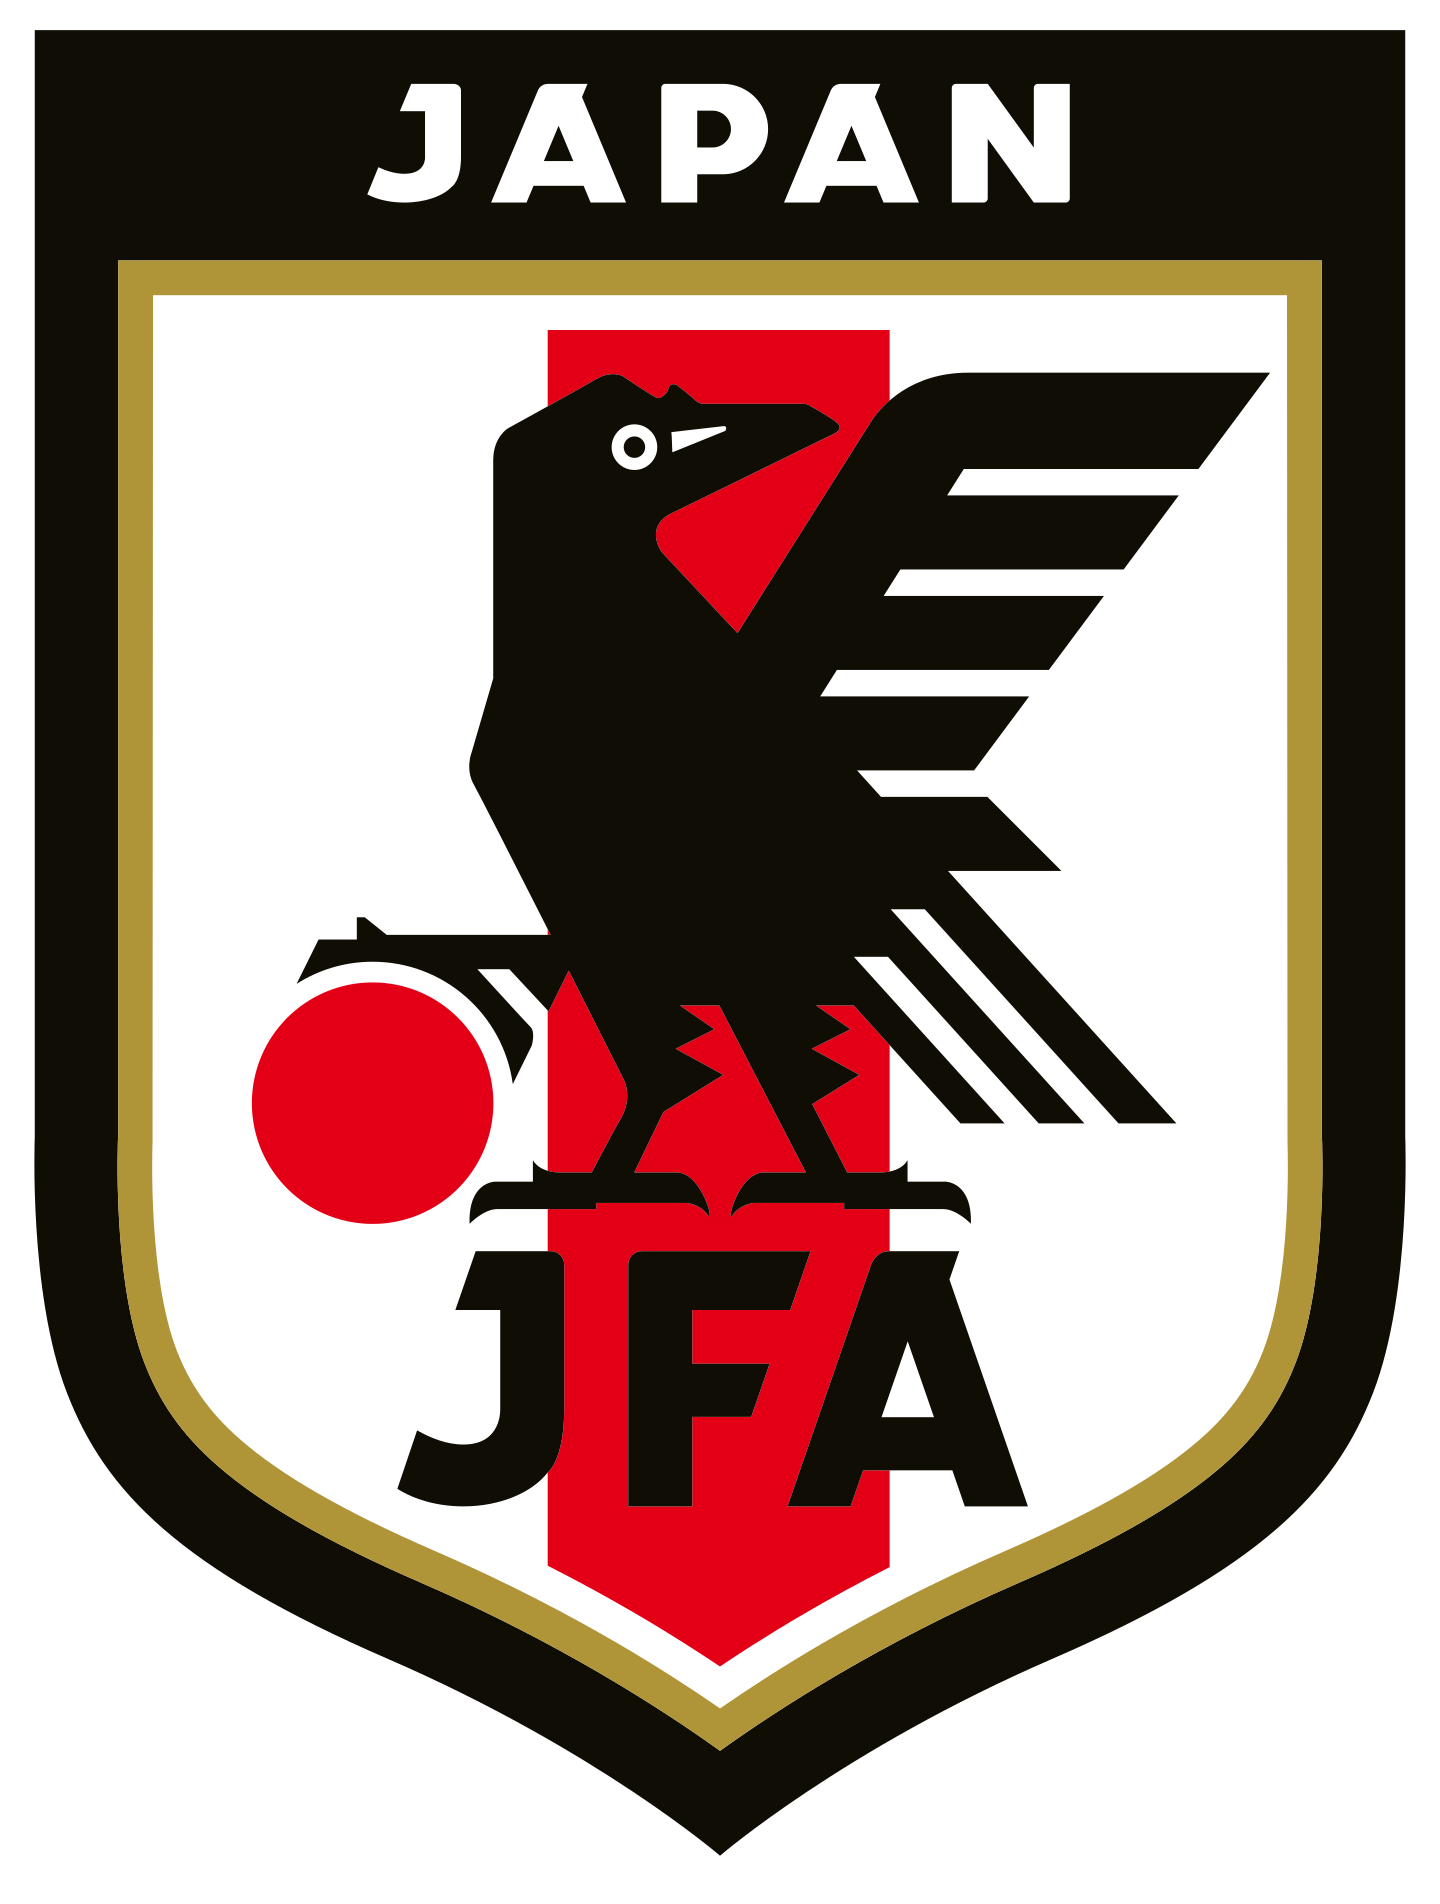 japan national football team logo 2 - Japan National Football Team Logo